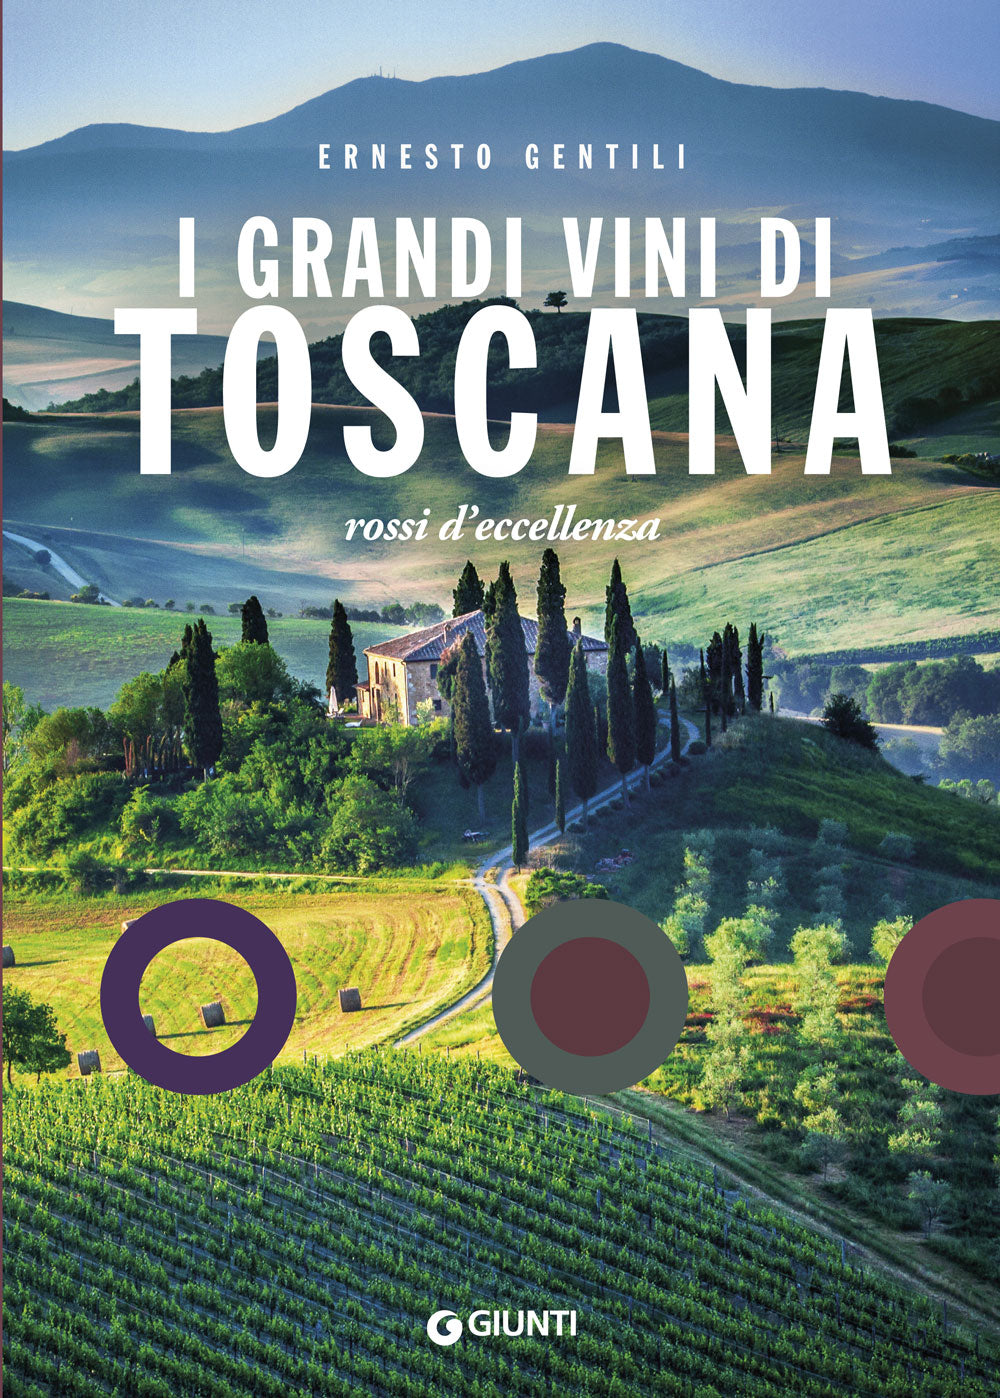 I grandi vini di Toscana::Rossi d'eccellenza